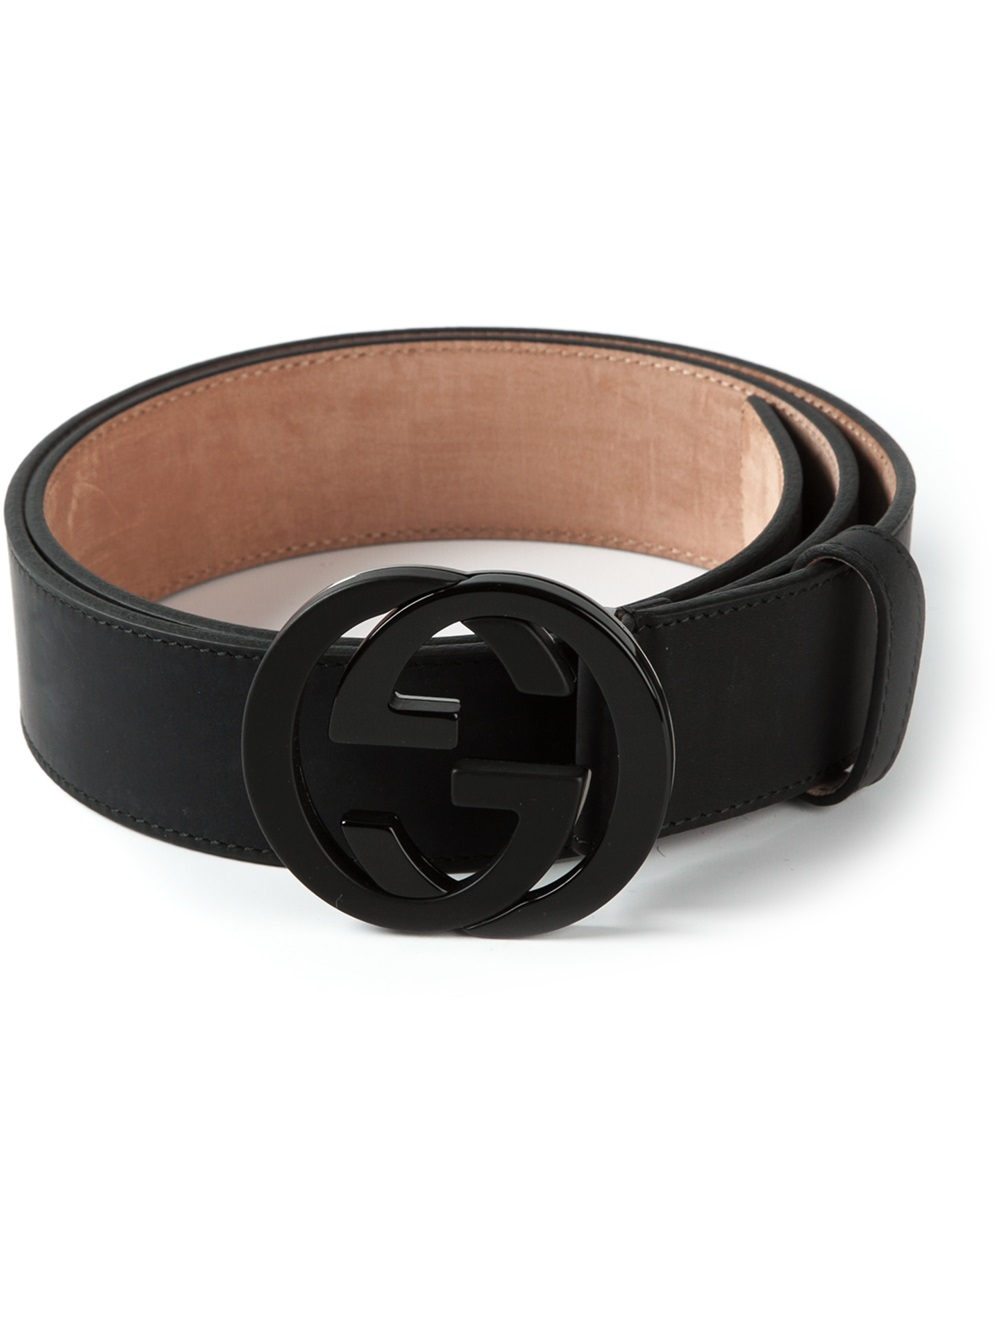 Gucci Logo Buckle Belt in Black for Men - Lyst